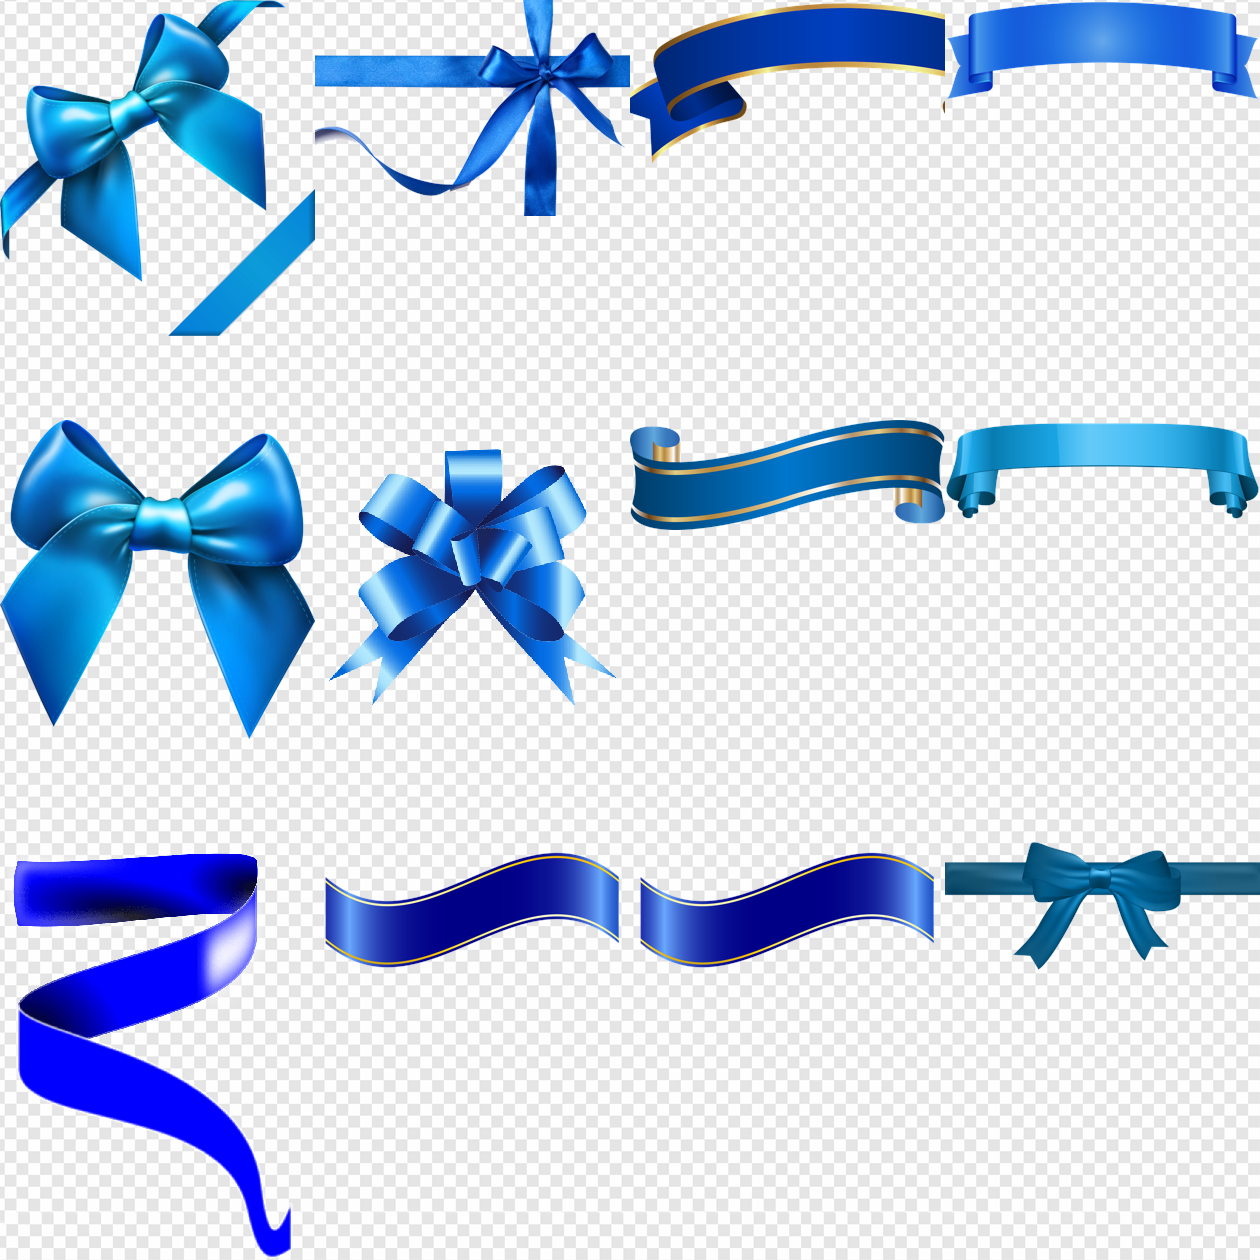 Blue Ribbon PNG Transparent Images Download - PNG Packs